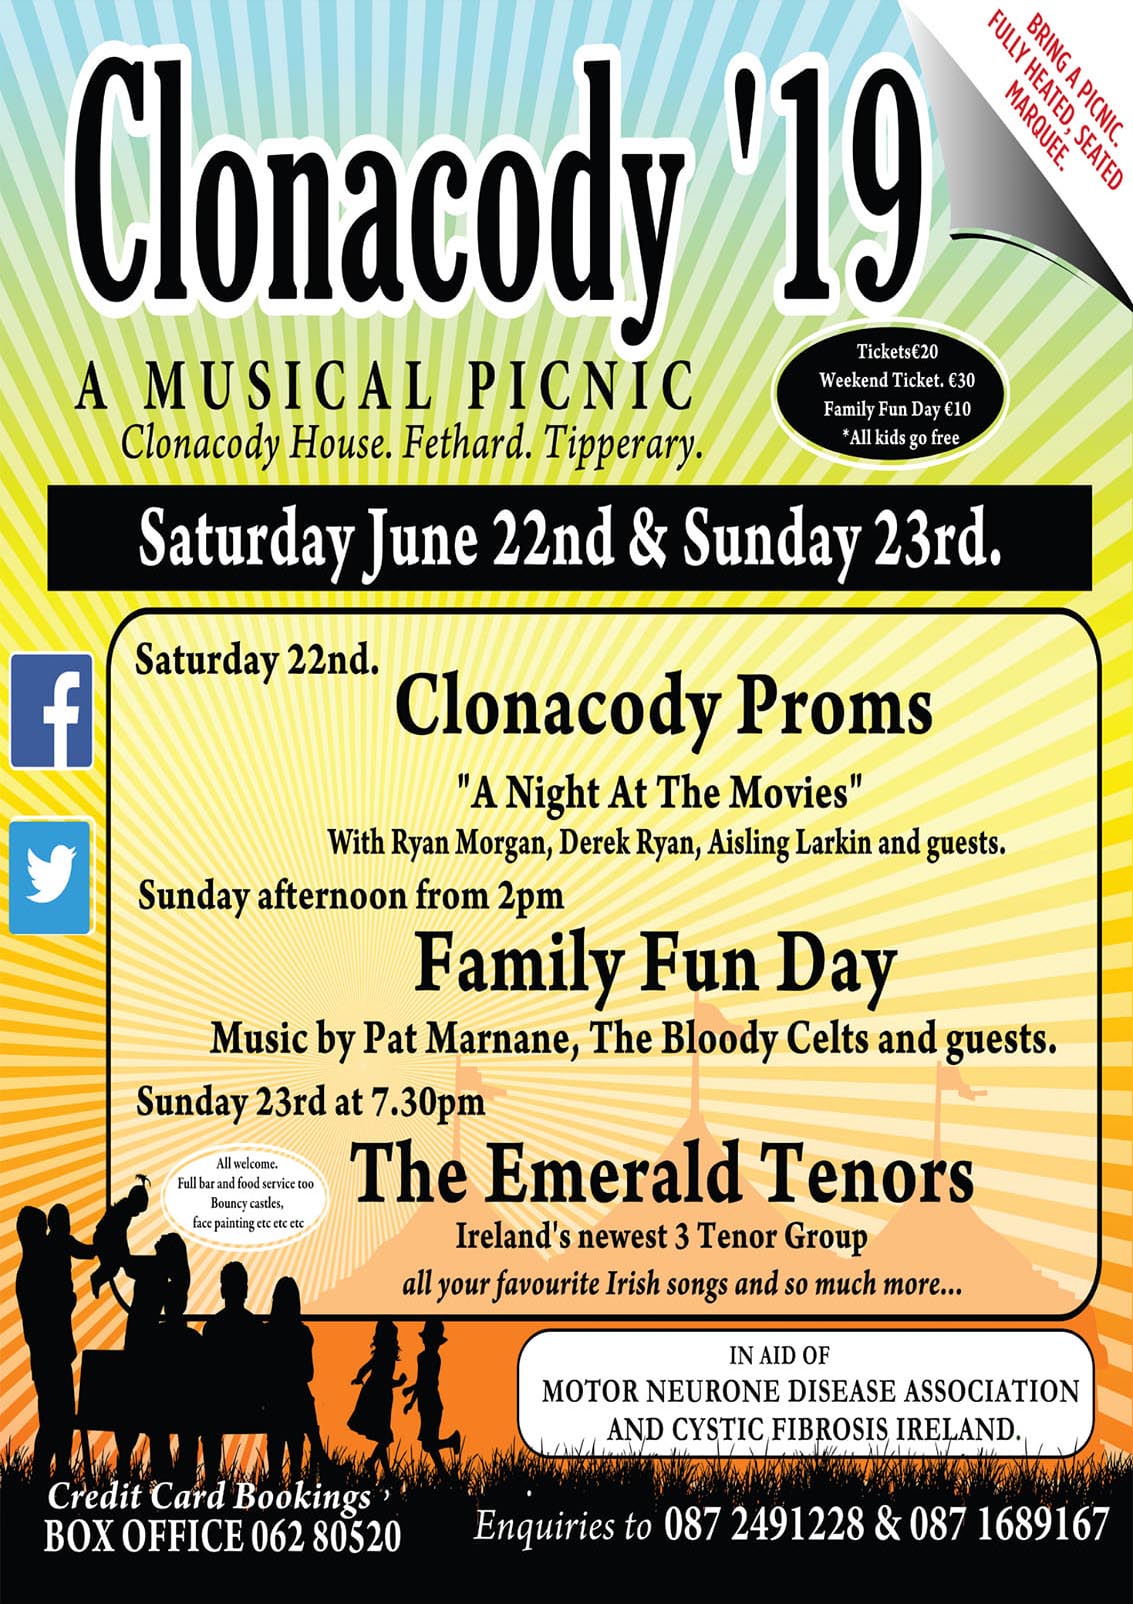 Clonacody '19 poster of events